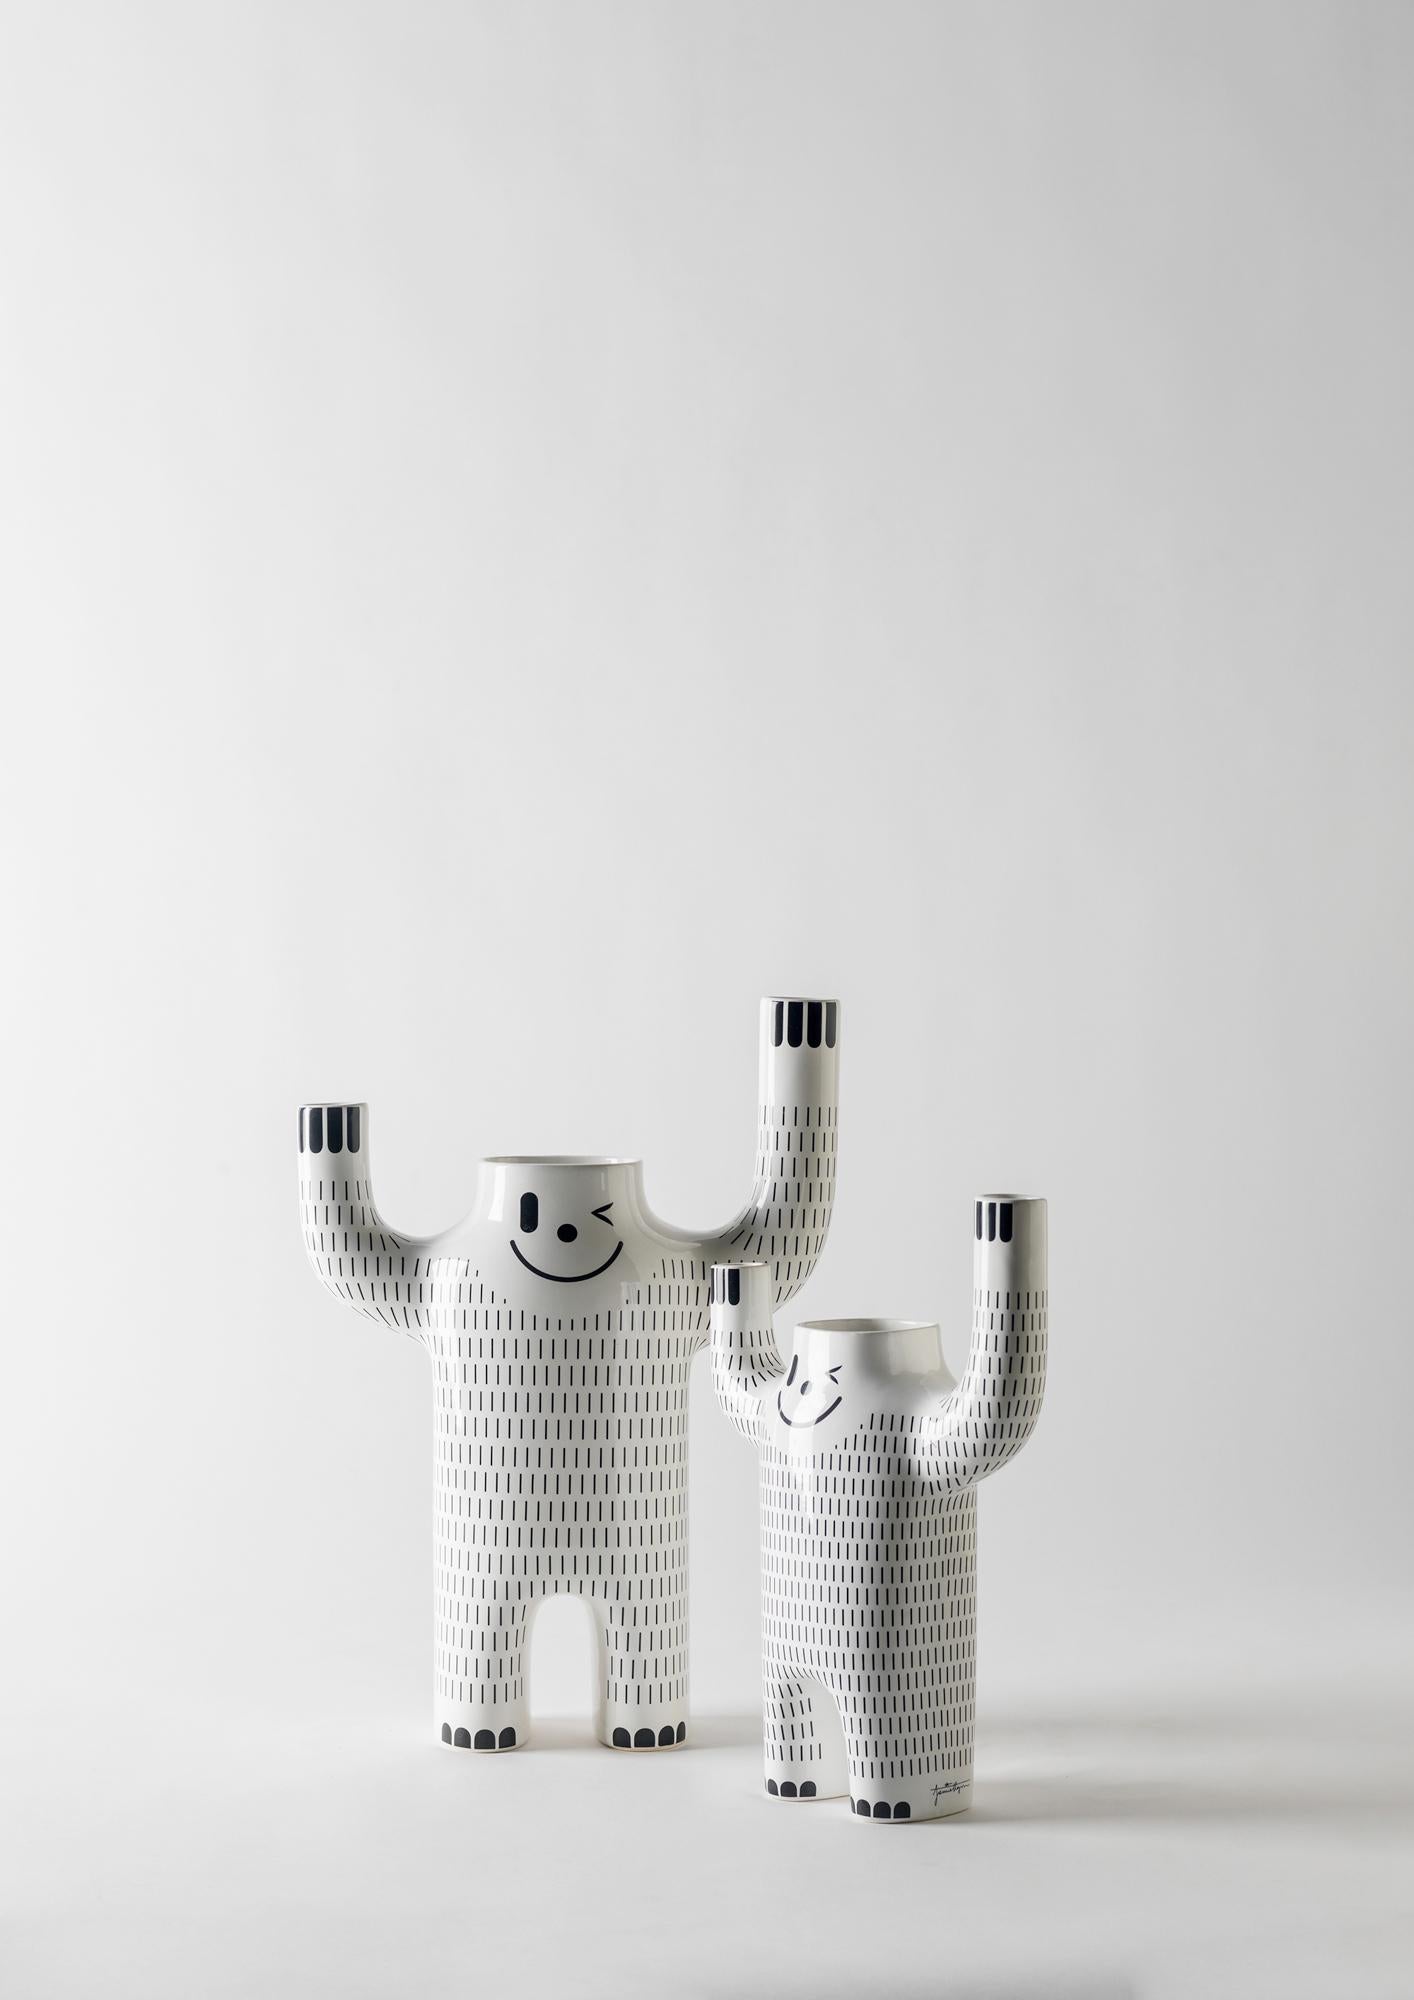 Spanish Small White Happy Susto Ceramic Flower Vase by Jaime Hayon, Contemporary Design 